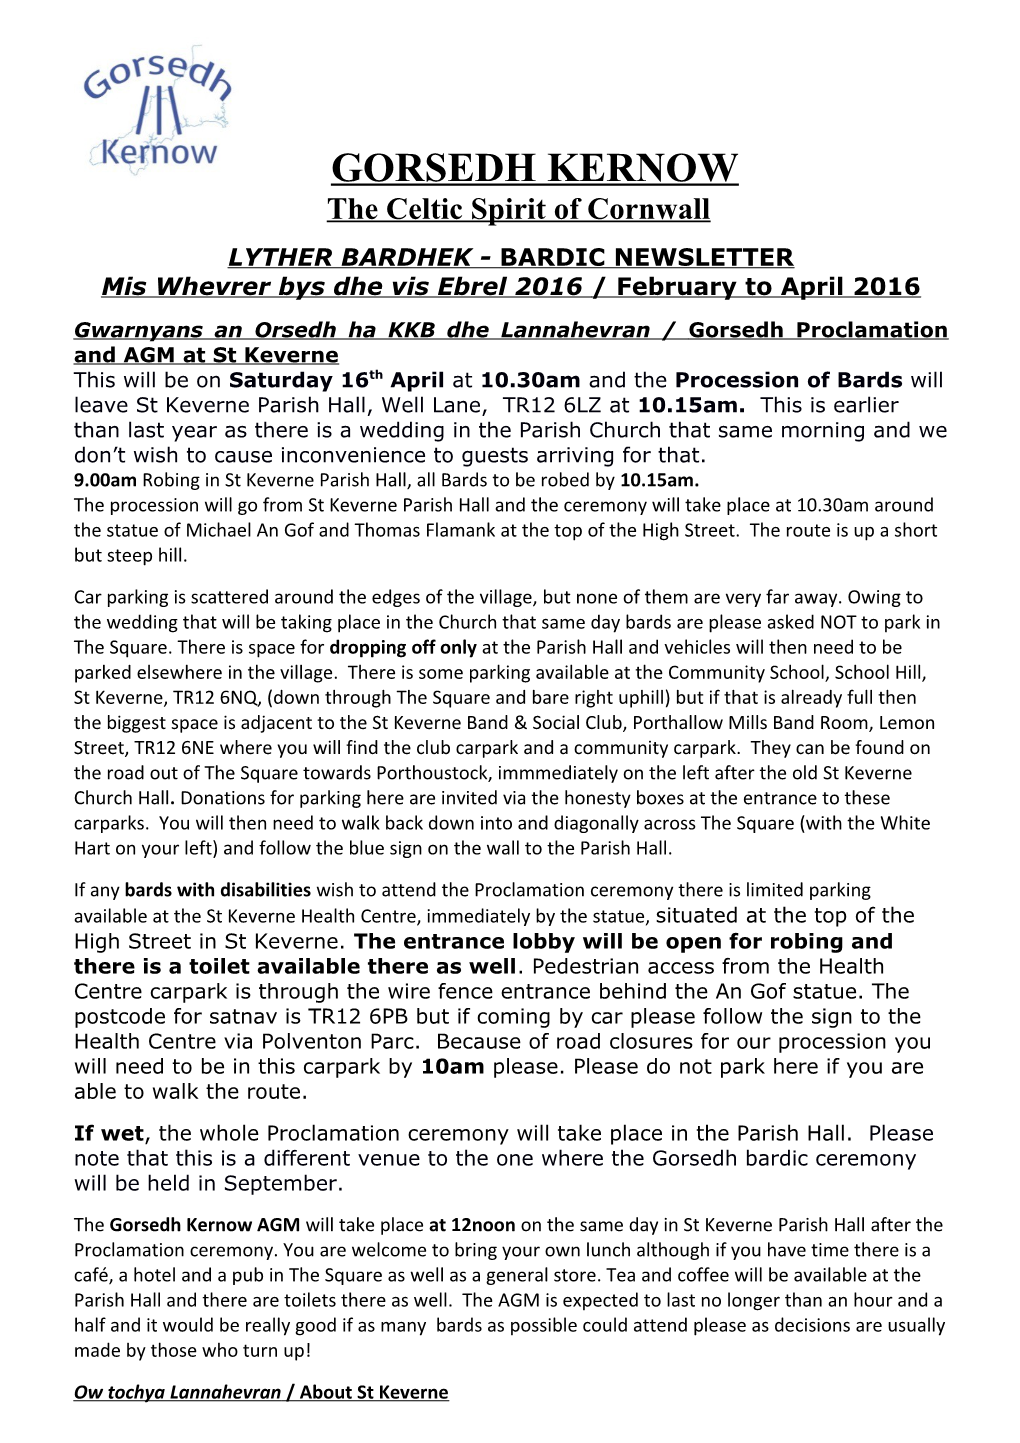 Lyther Bardhek - Bardic Newsletter